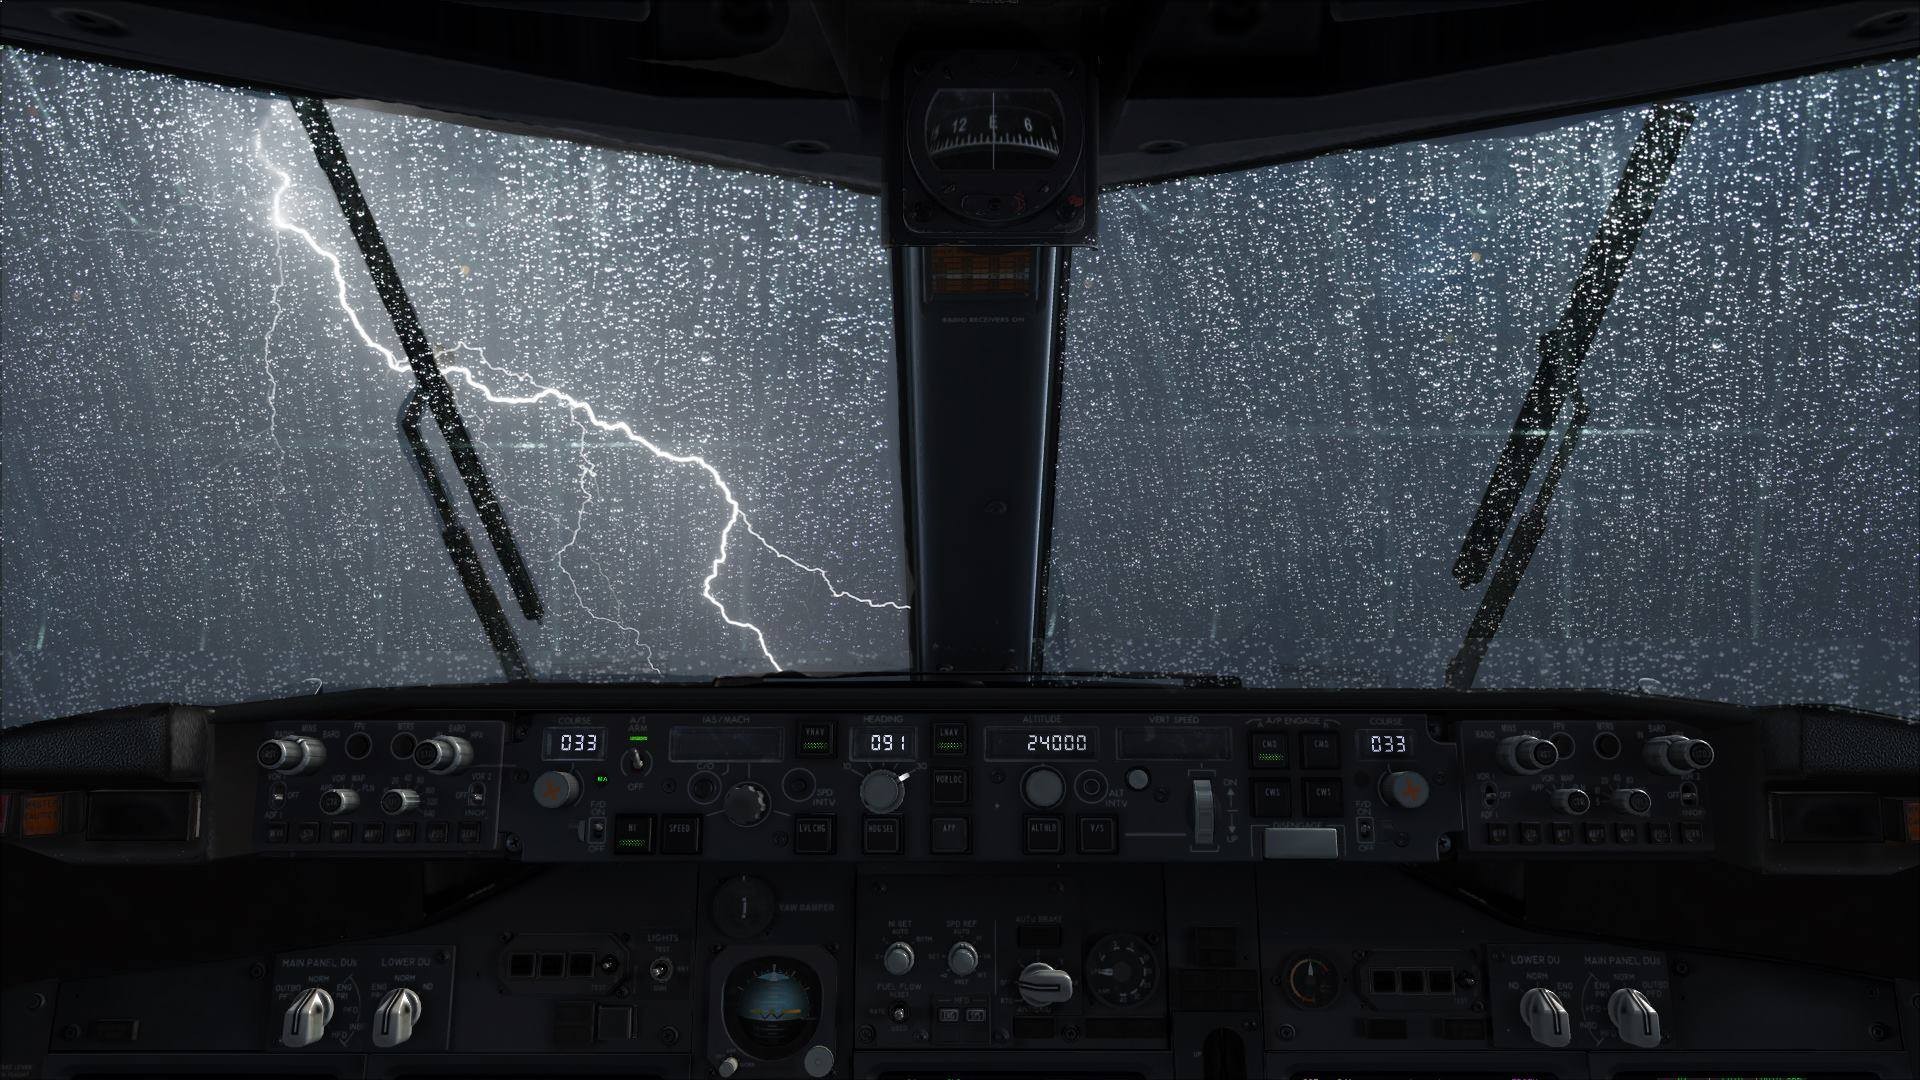 Airplane Lightning Rain Water On Glass Boeing 737 Aircraft Storm 1920x1080